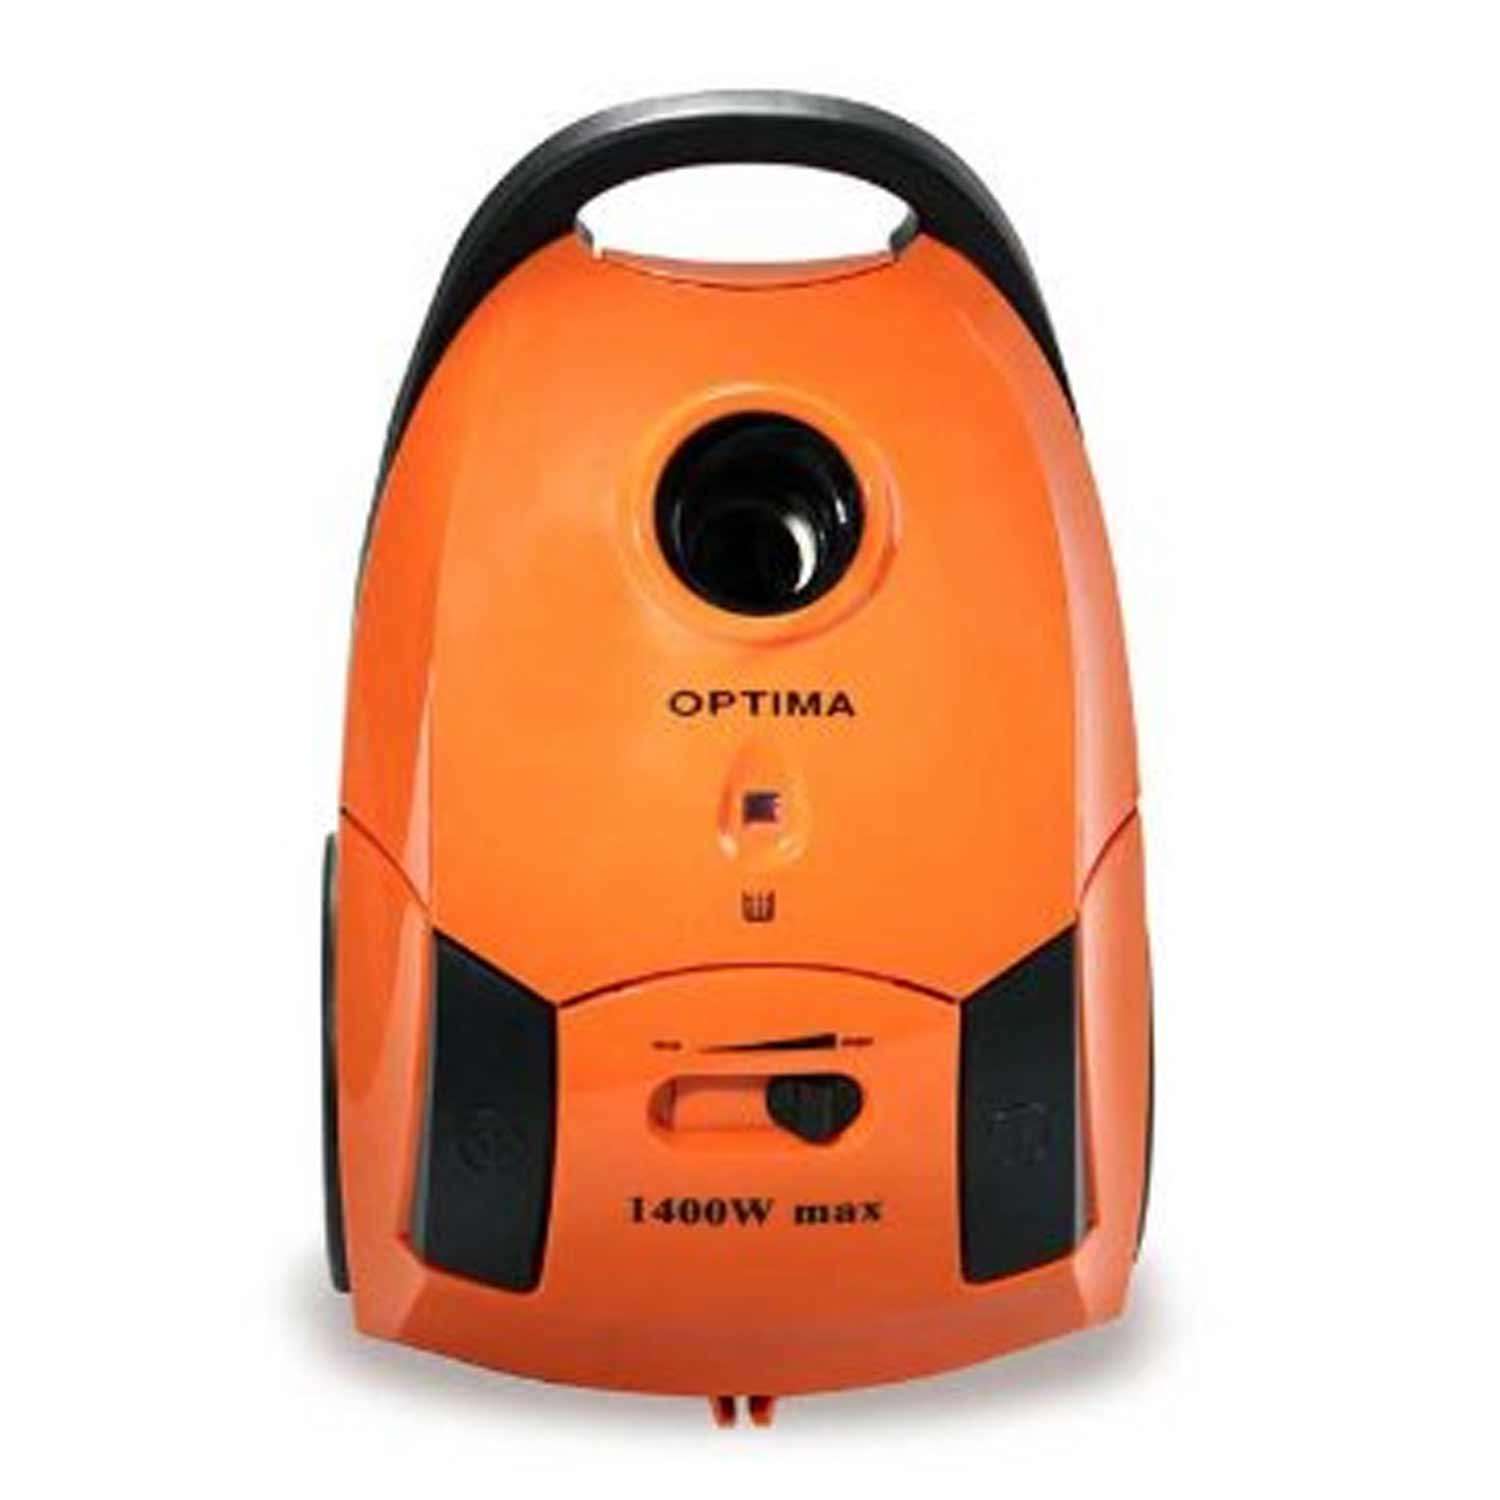 Optima VC 1400 2-Litre 1400-Watt Canister Vacuum Cleaner